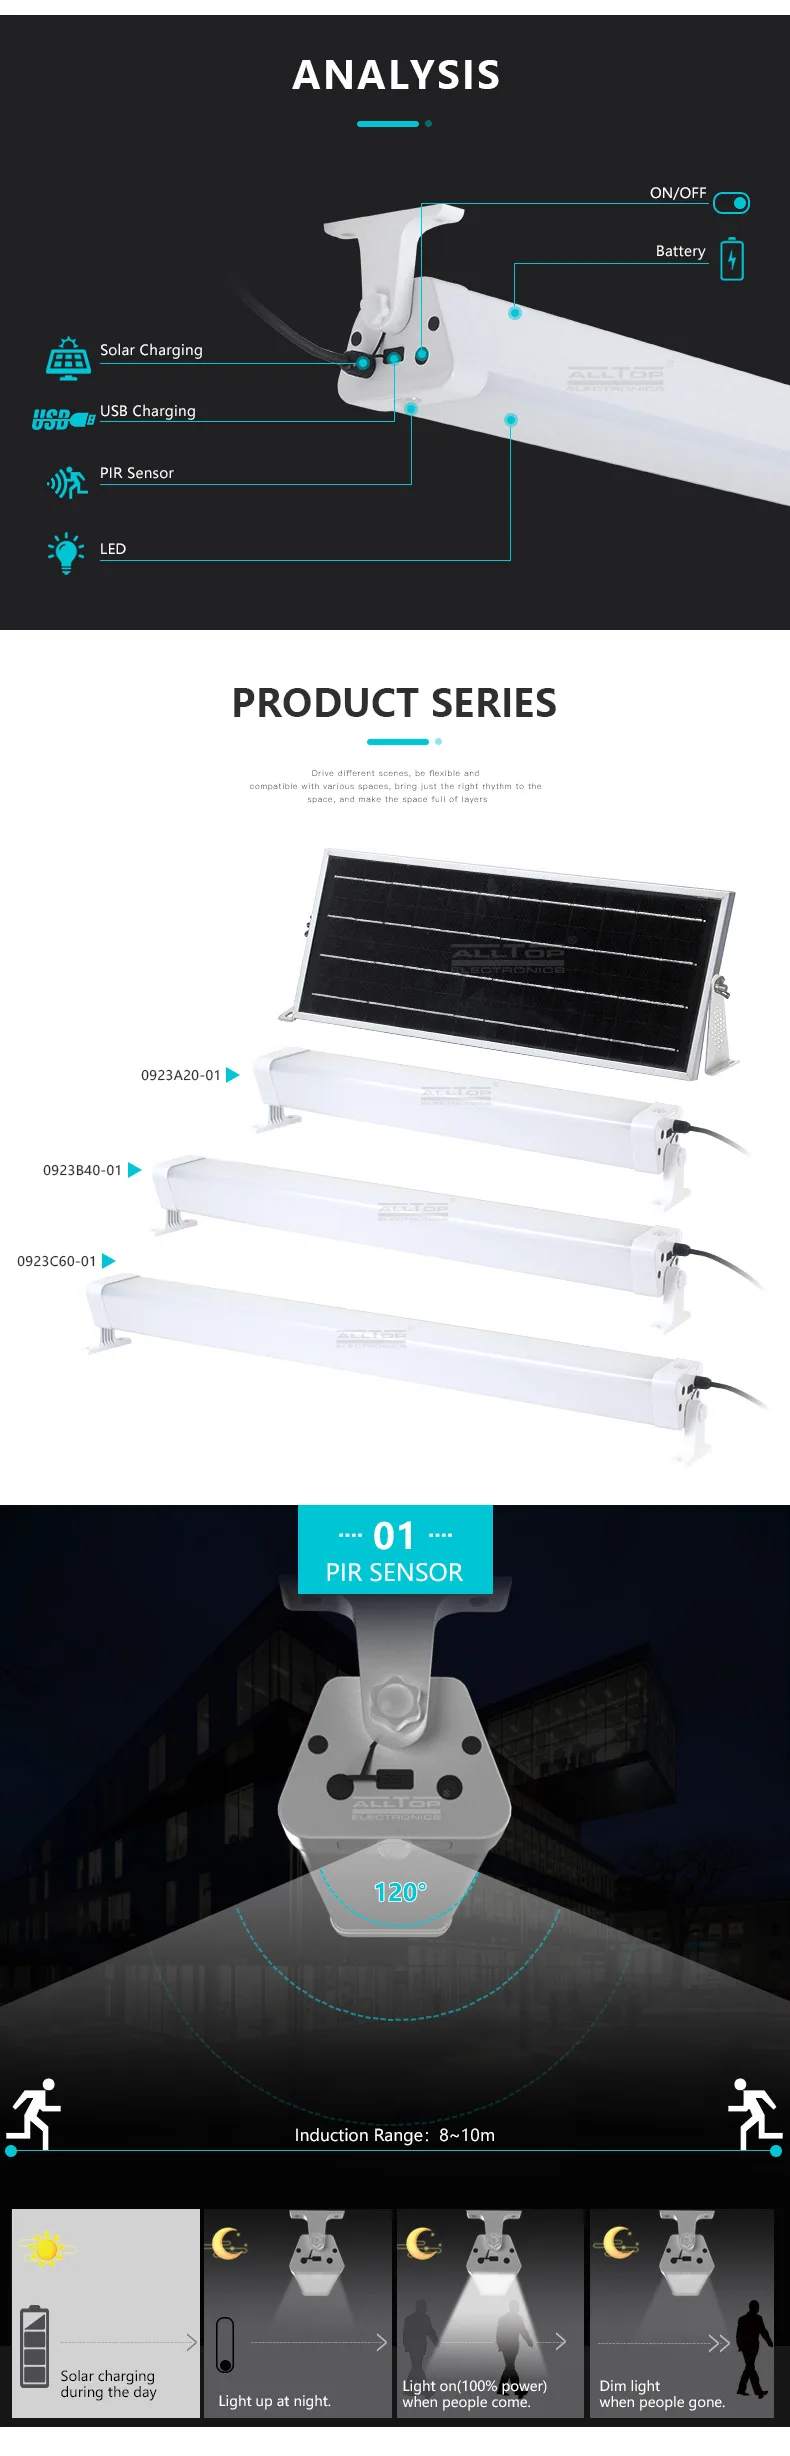 ALLTOP Hot sale outdoor lighting PIR sensor smd 20w 40w 60w led solar tri proof light